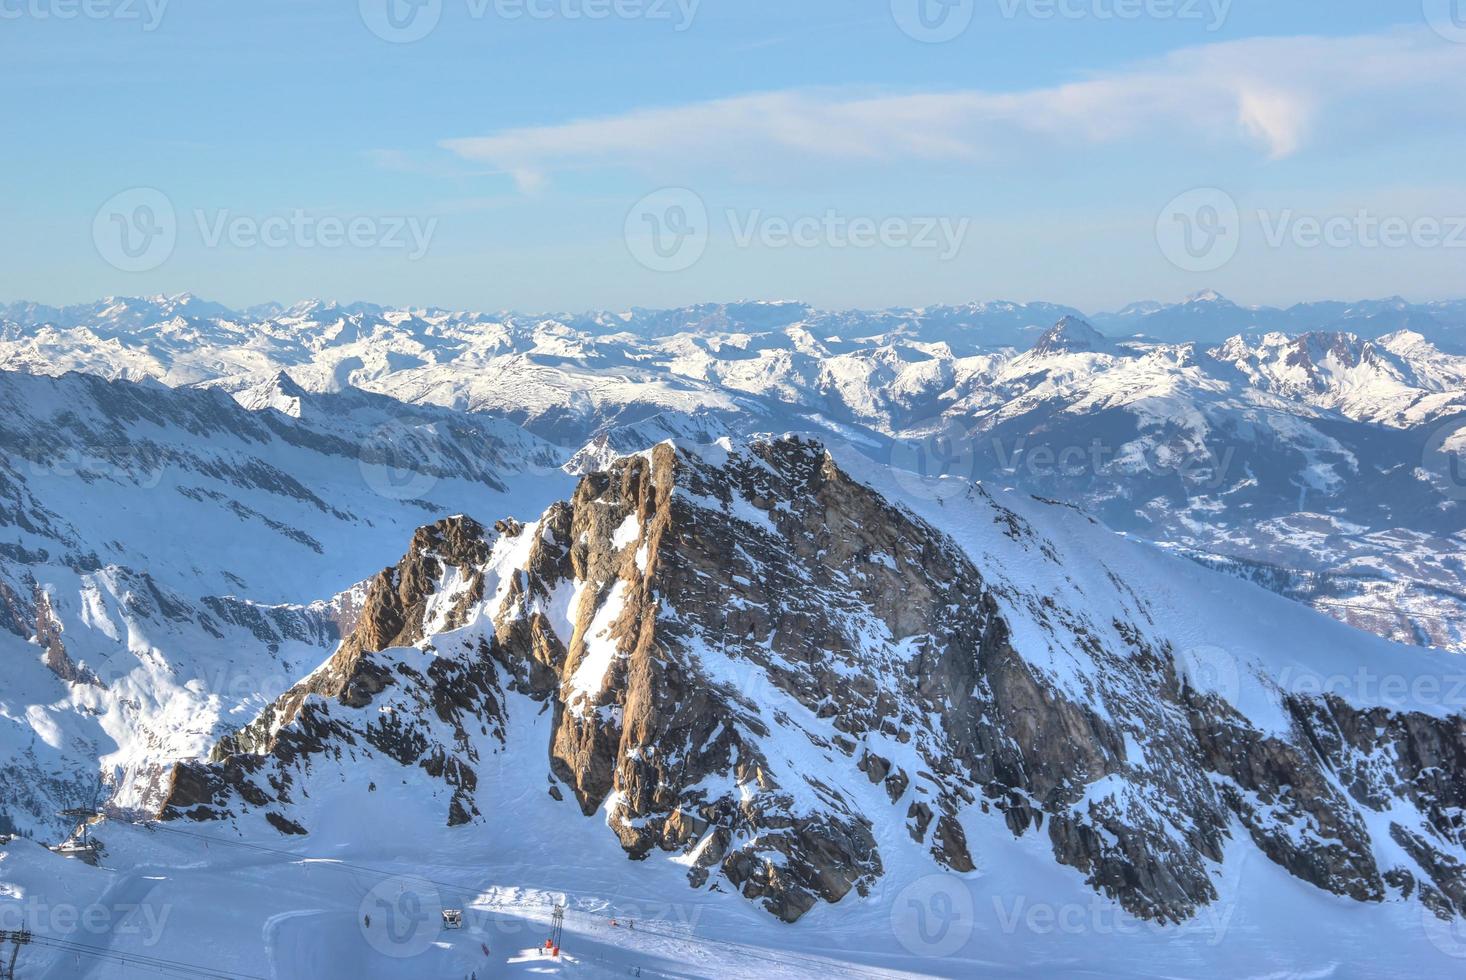 Viste favolose - comprensorio sciistico di montagna Kitzsteinhorn, Austria. foto